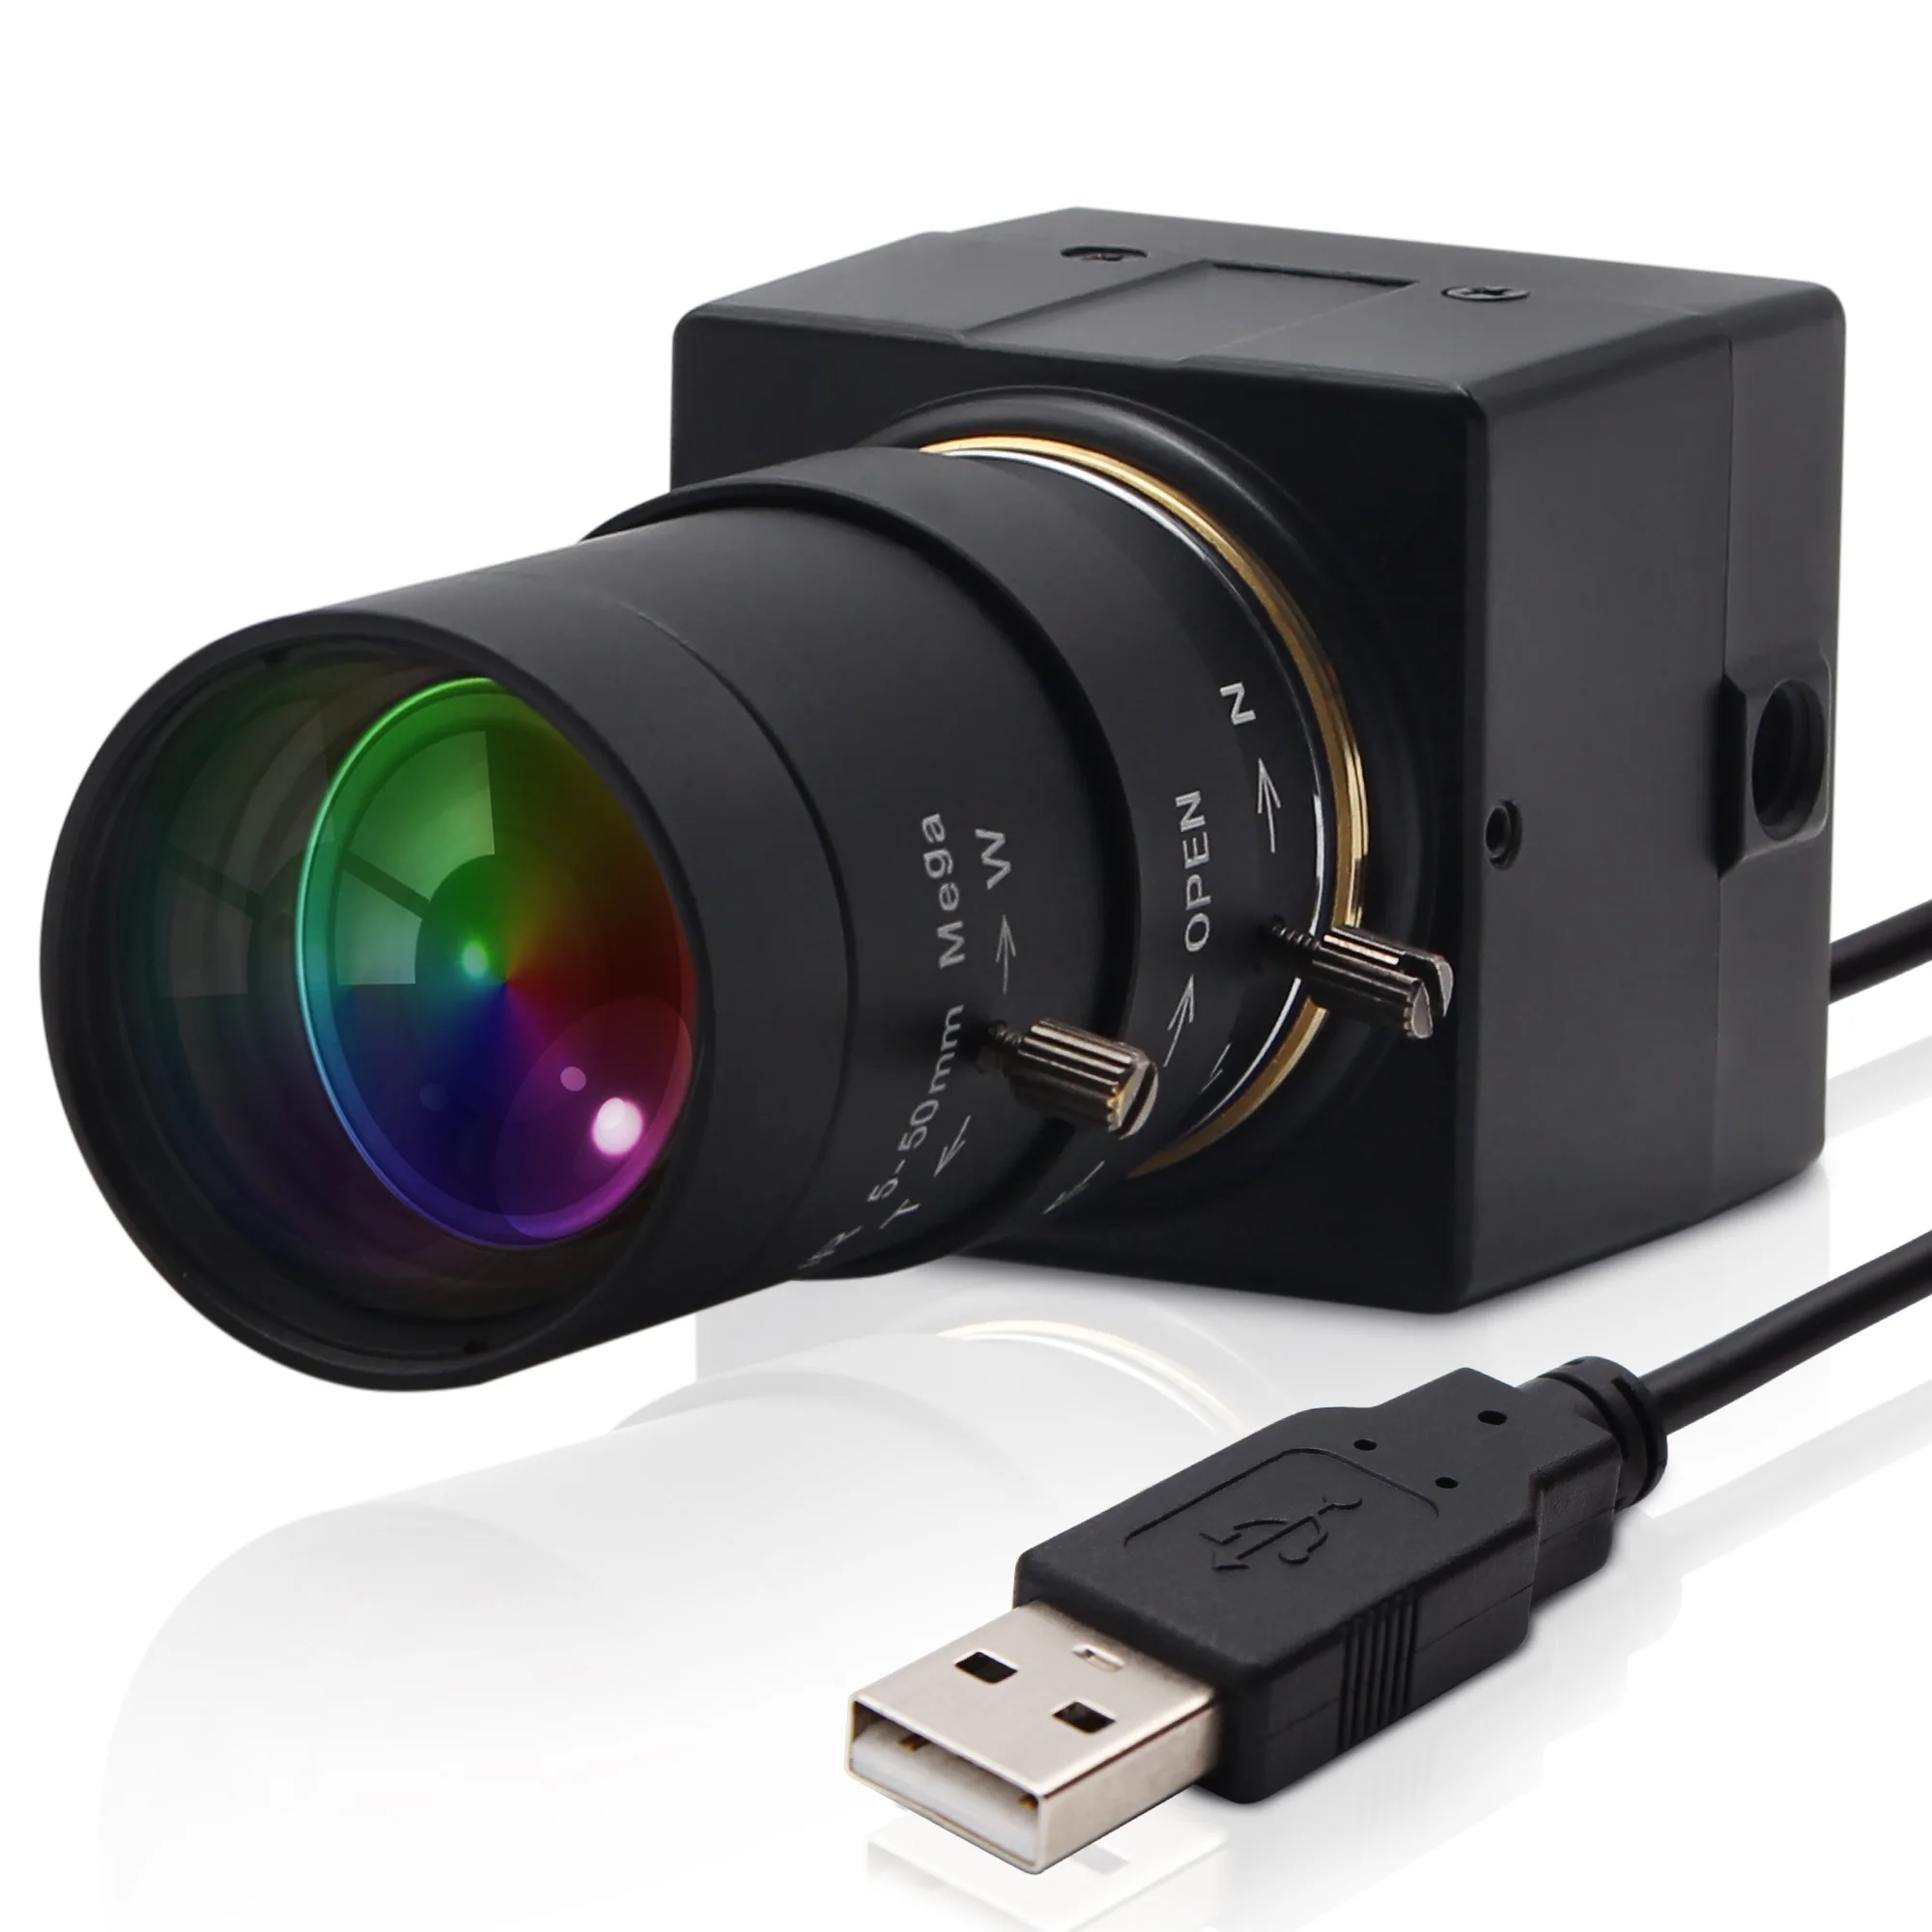 

HD 720P USB Webcam Camera CMOS OV9712 H.264 MJPEG YUYV USB 2.0 Video Web Camera with CS lens for Android Linux Windows MAC OS